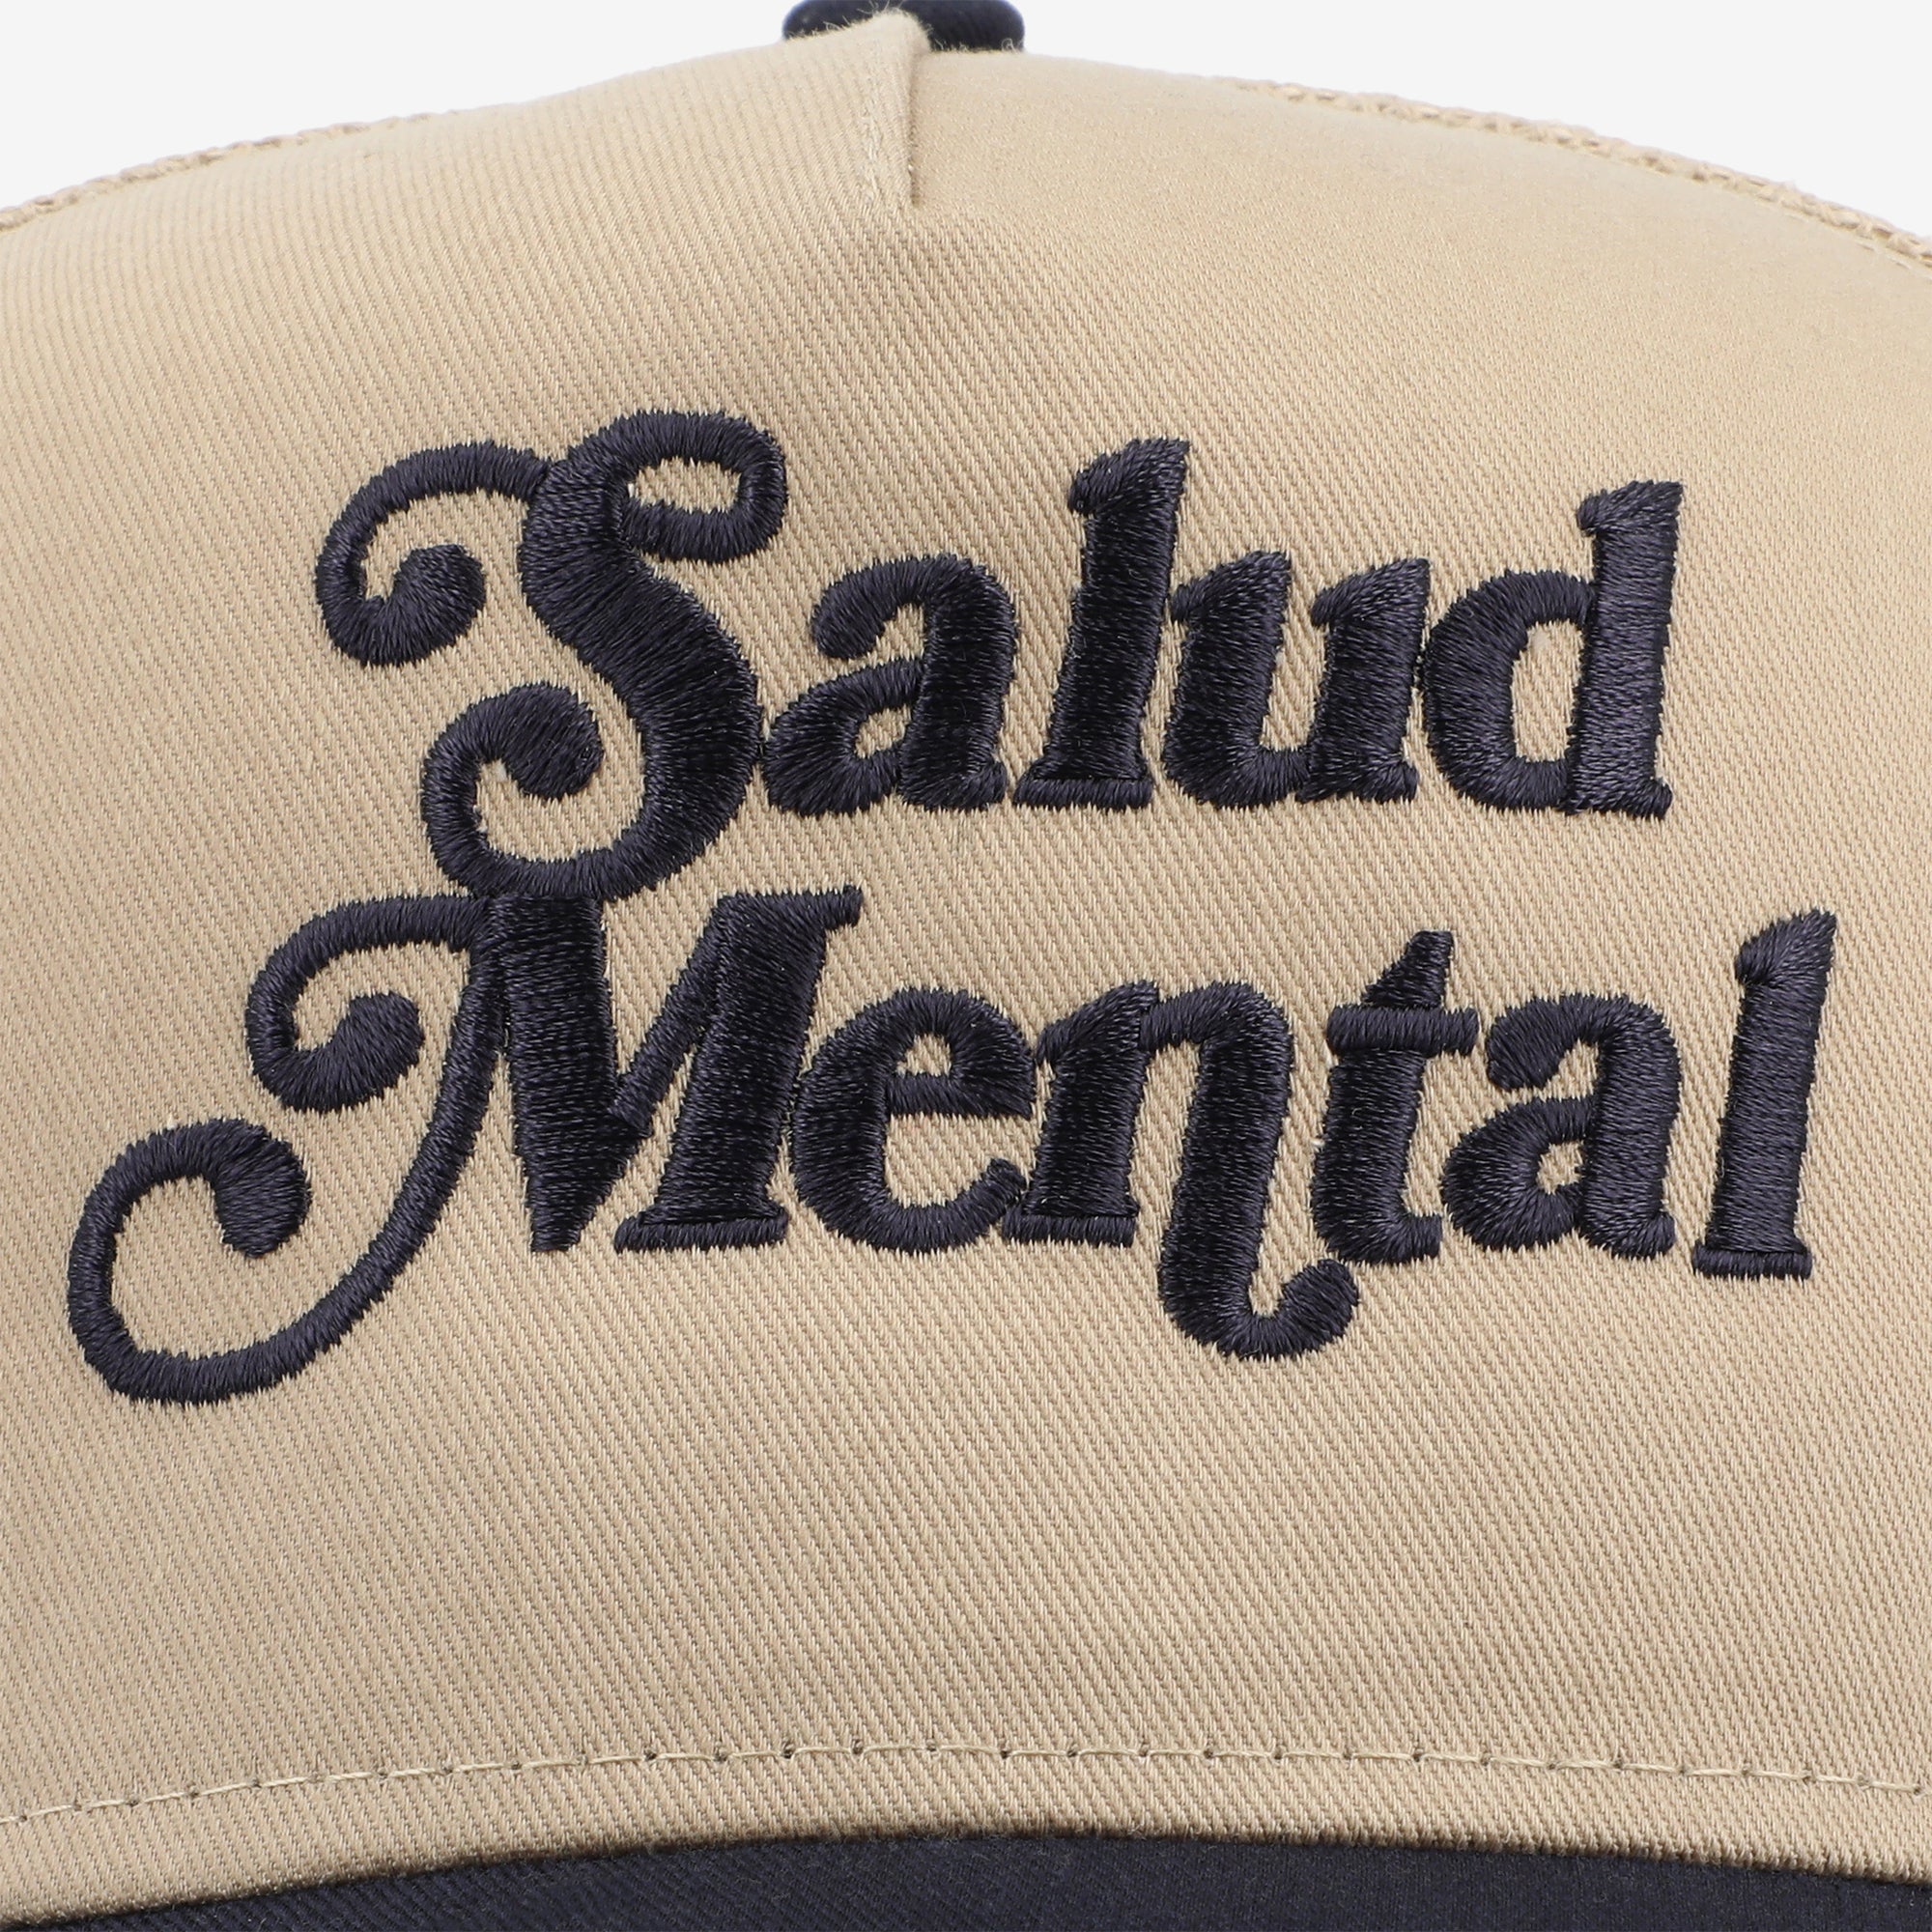 Salud Mental Hat in Navy/Khaki